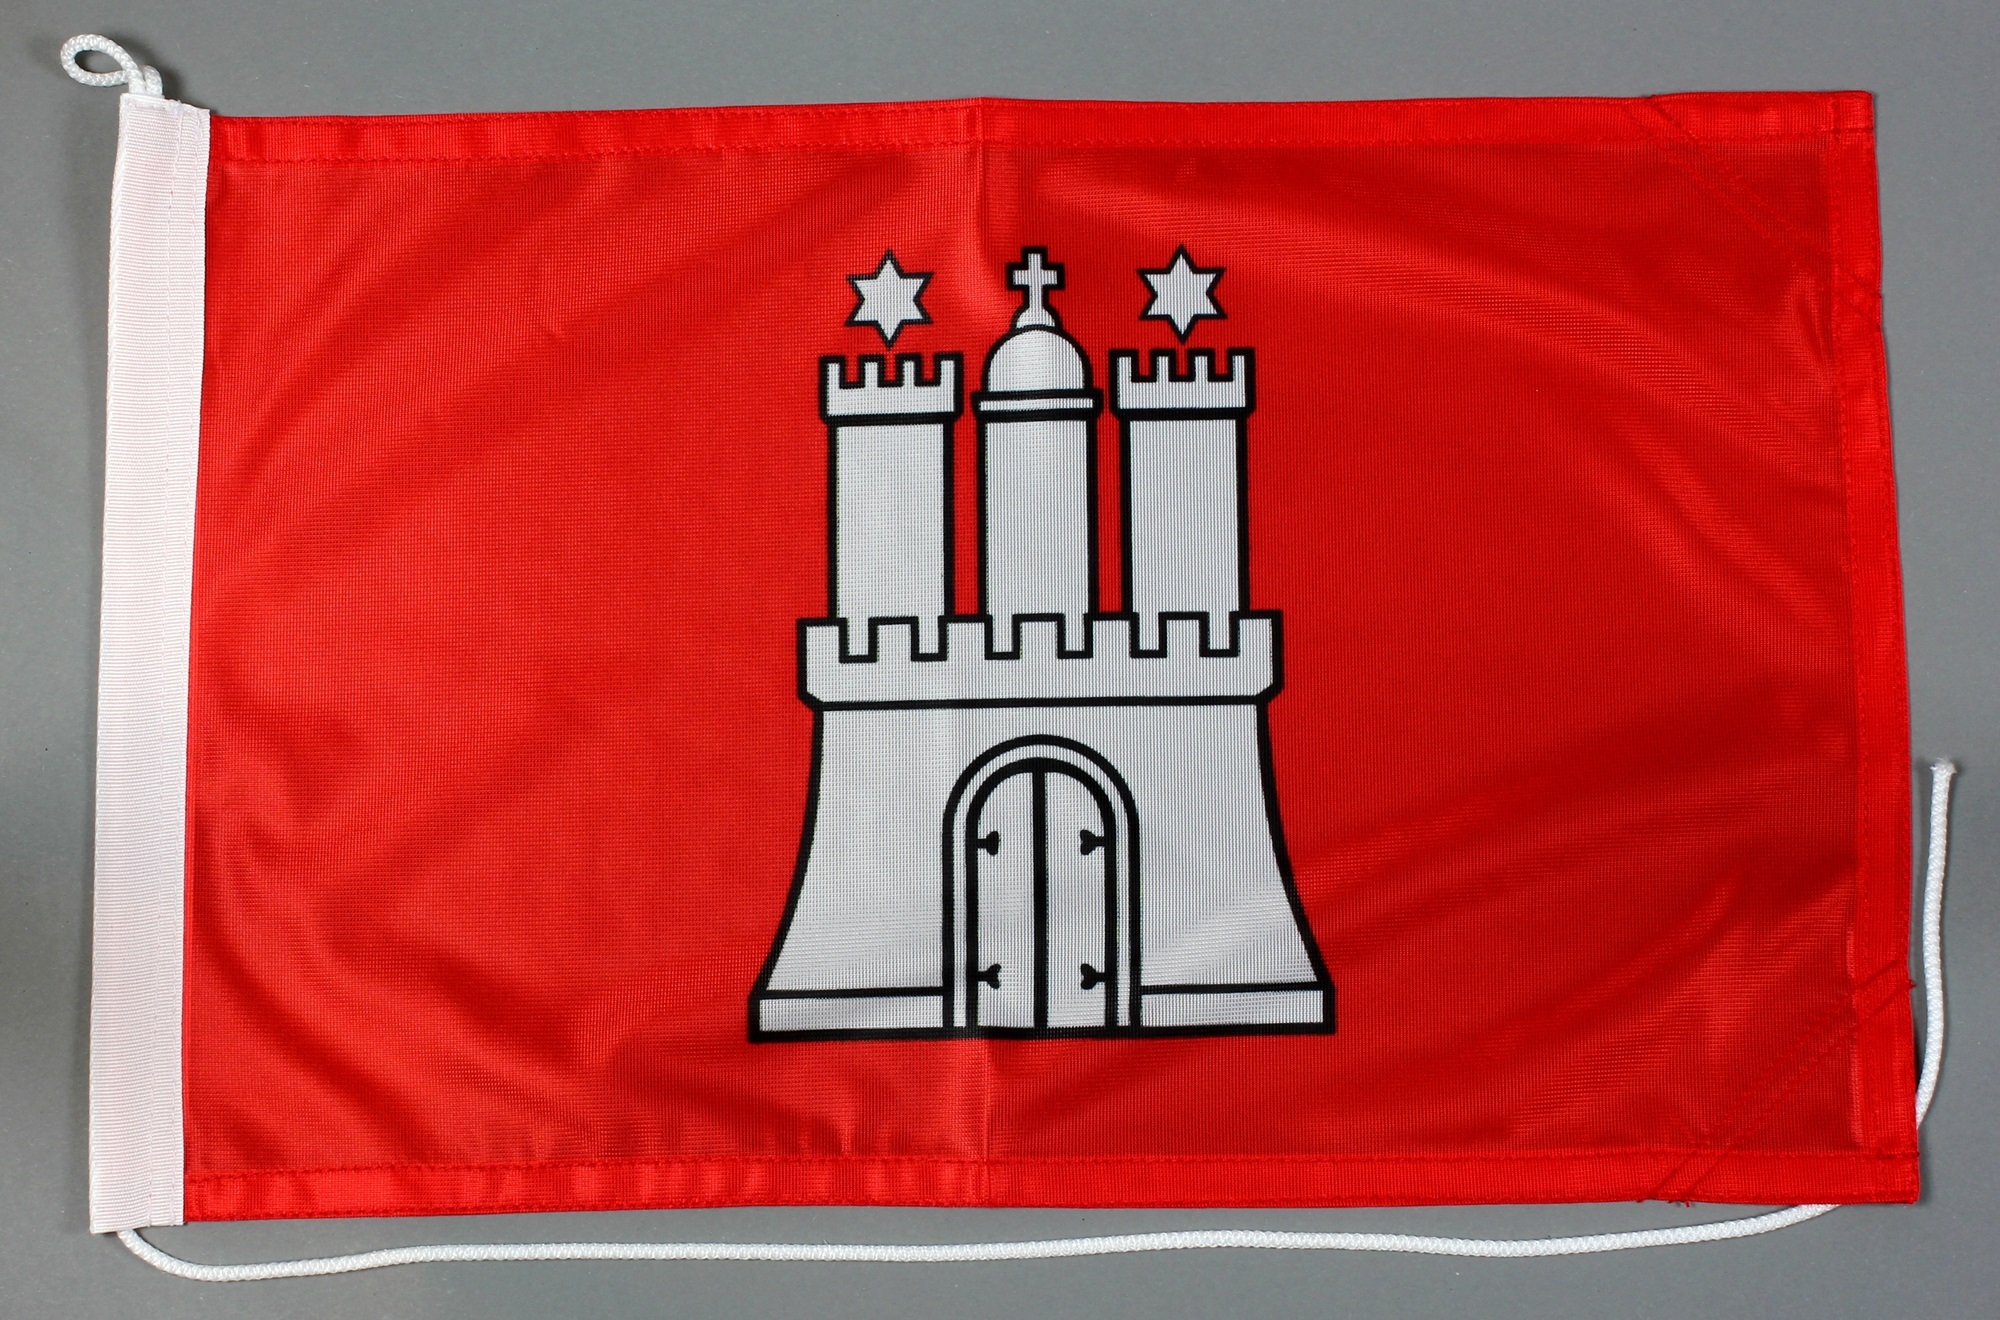 AZ FLAG BOOTFLAGGE NORDIRLAND 45x30cm IRISCHE NORDFAHNE BOOTSFAHNE 30 x 45 cm Marine flaggen Top Qualit/ät